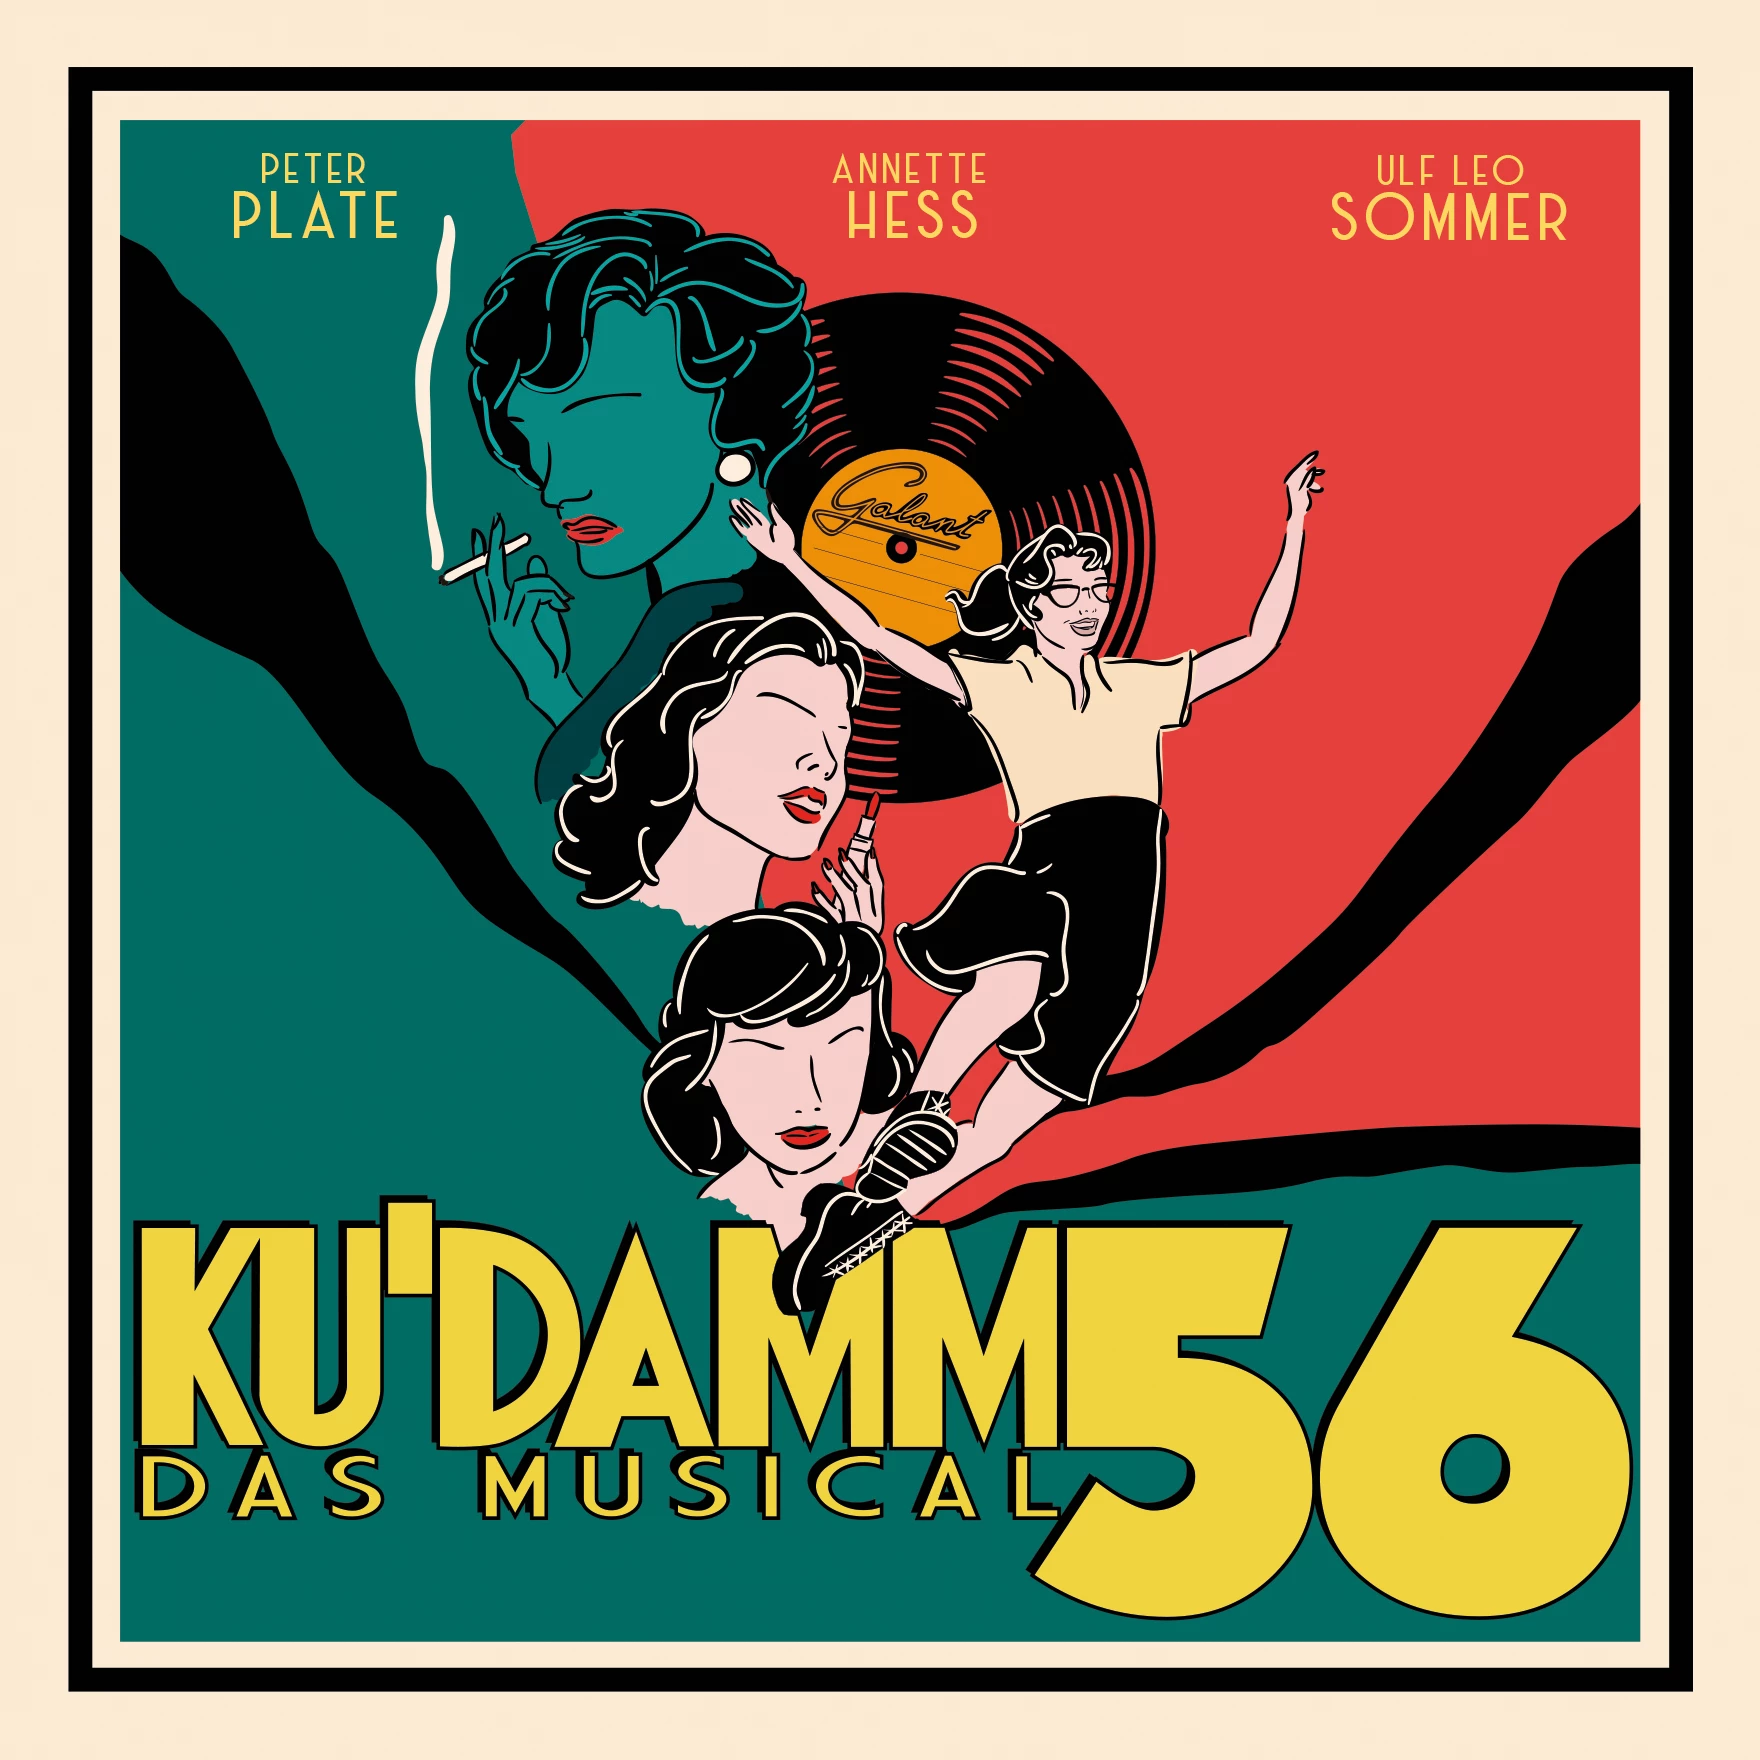 Kudamm 56 Musical in Berlin - Logo